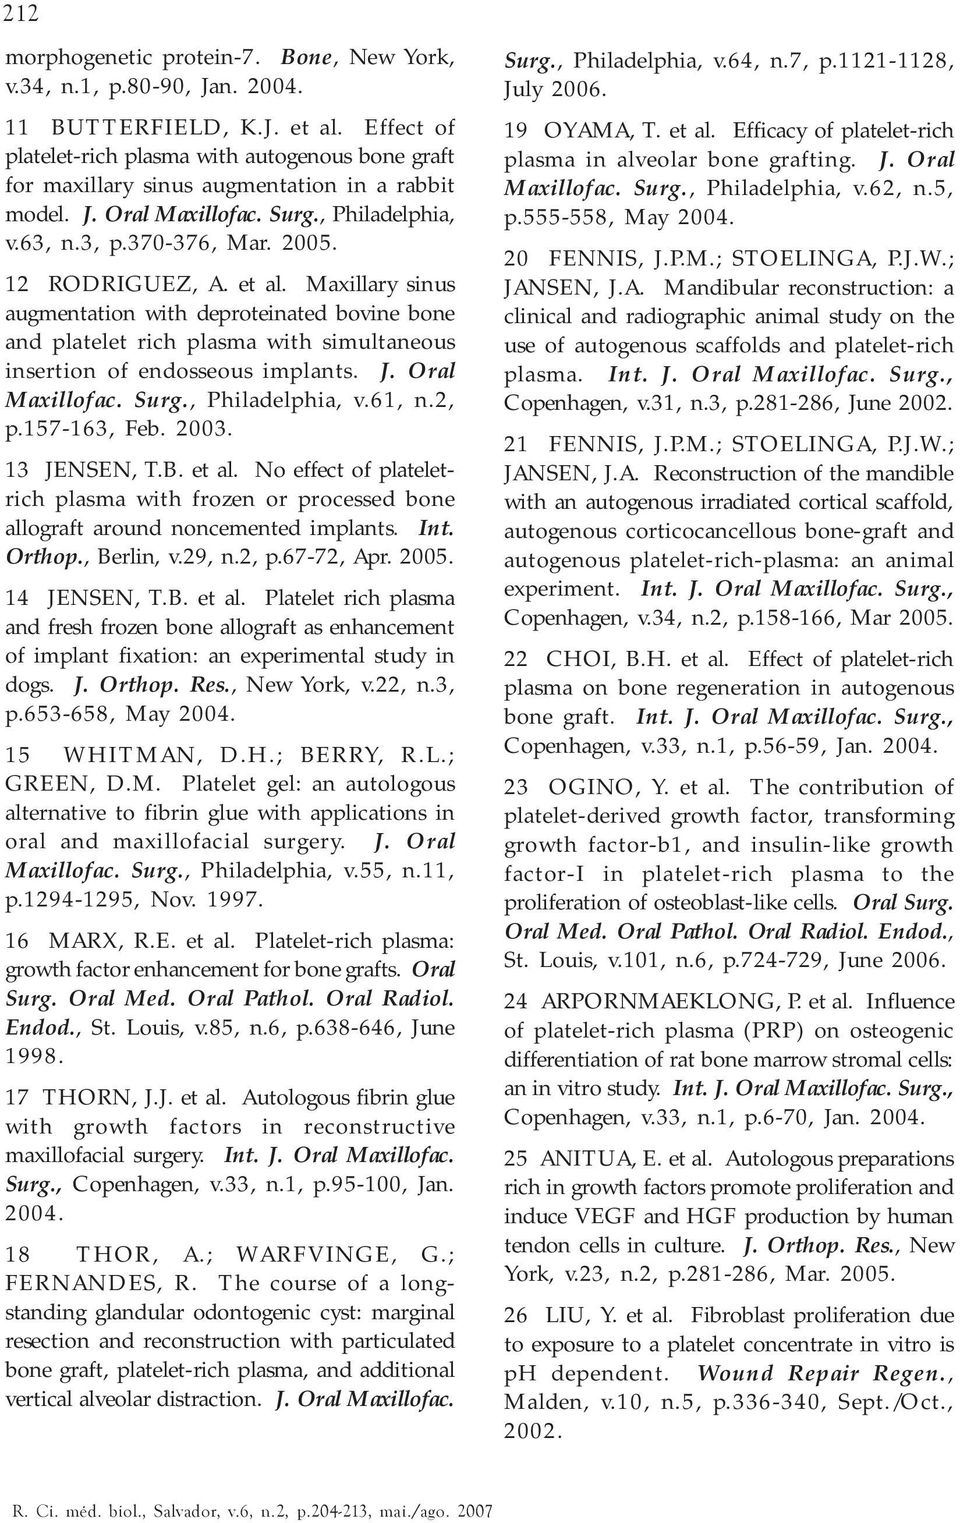 et al. Maxillary sinus augmentation with deproteinated bovine bone and platelet rich plasma with simultaneous insertion of endosseous implants. J. Oral Maxillofac. Surg., Philadelphia, v.61, n.2, p.